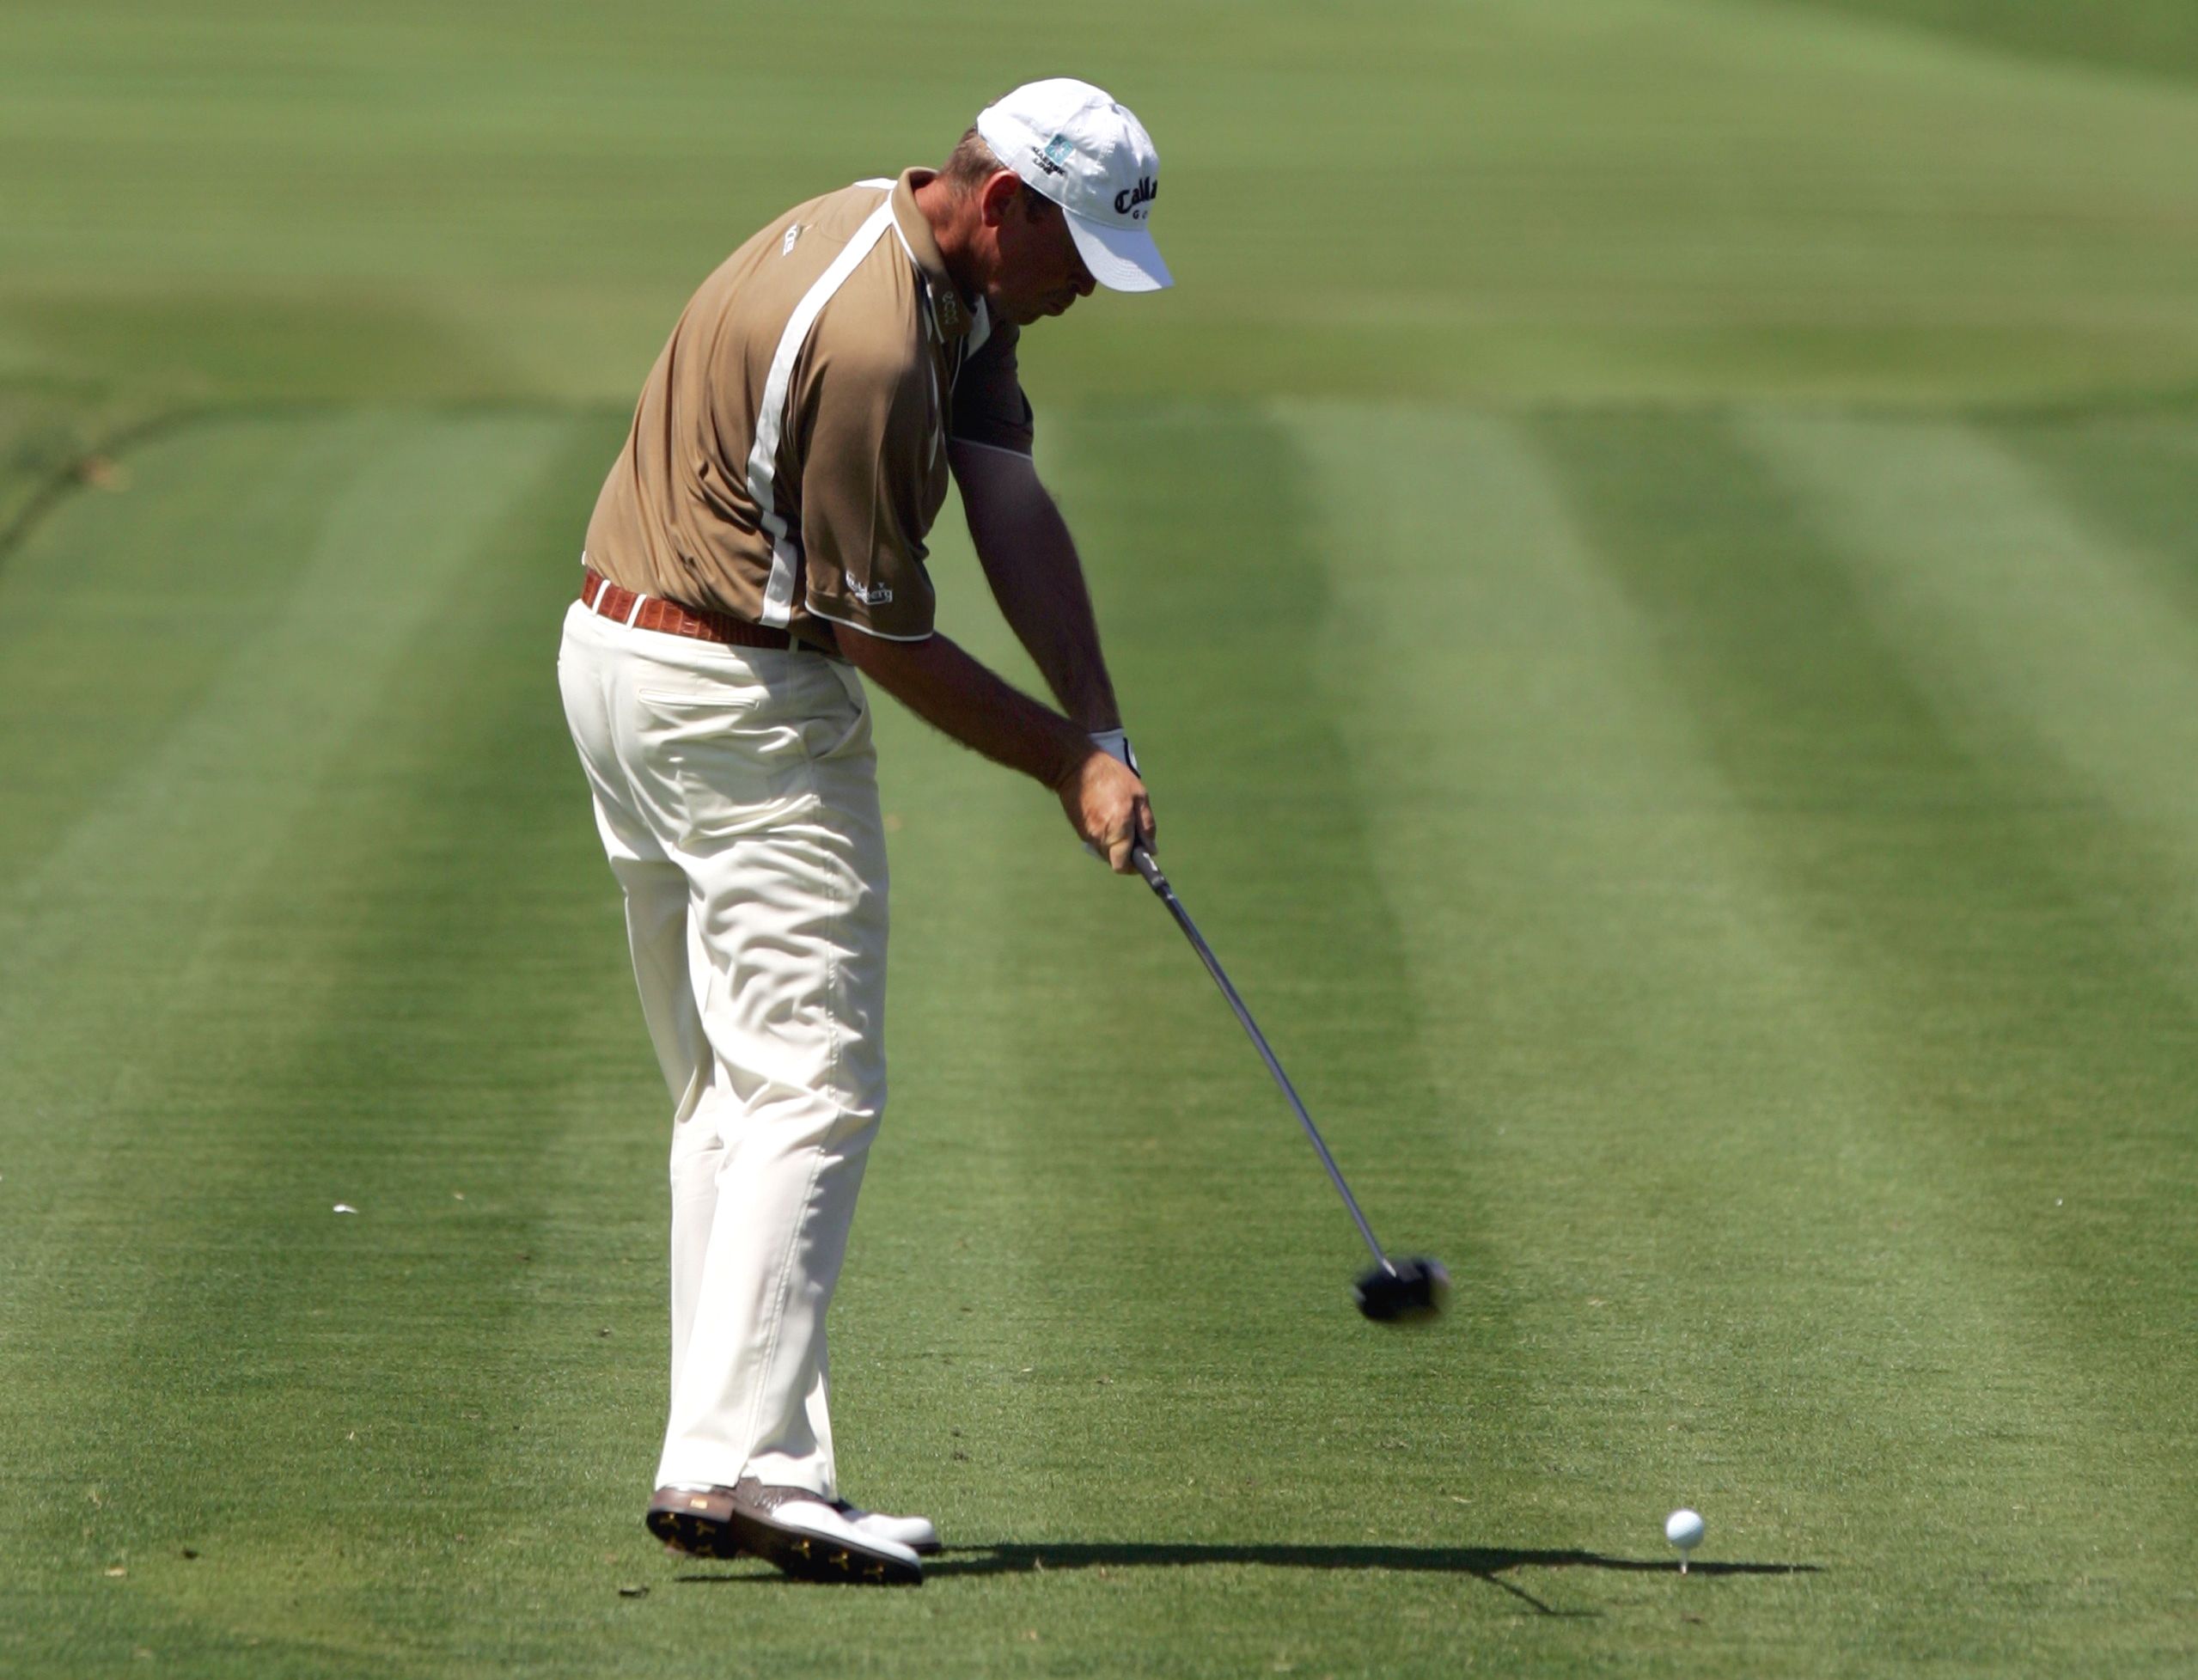 lag clubhead golf swing head clubs drills putting visit